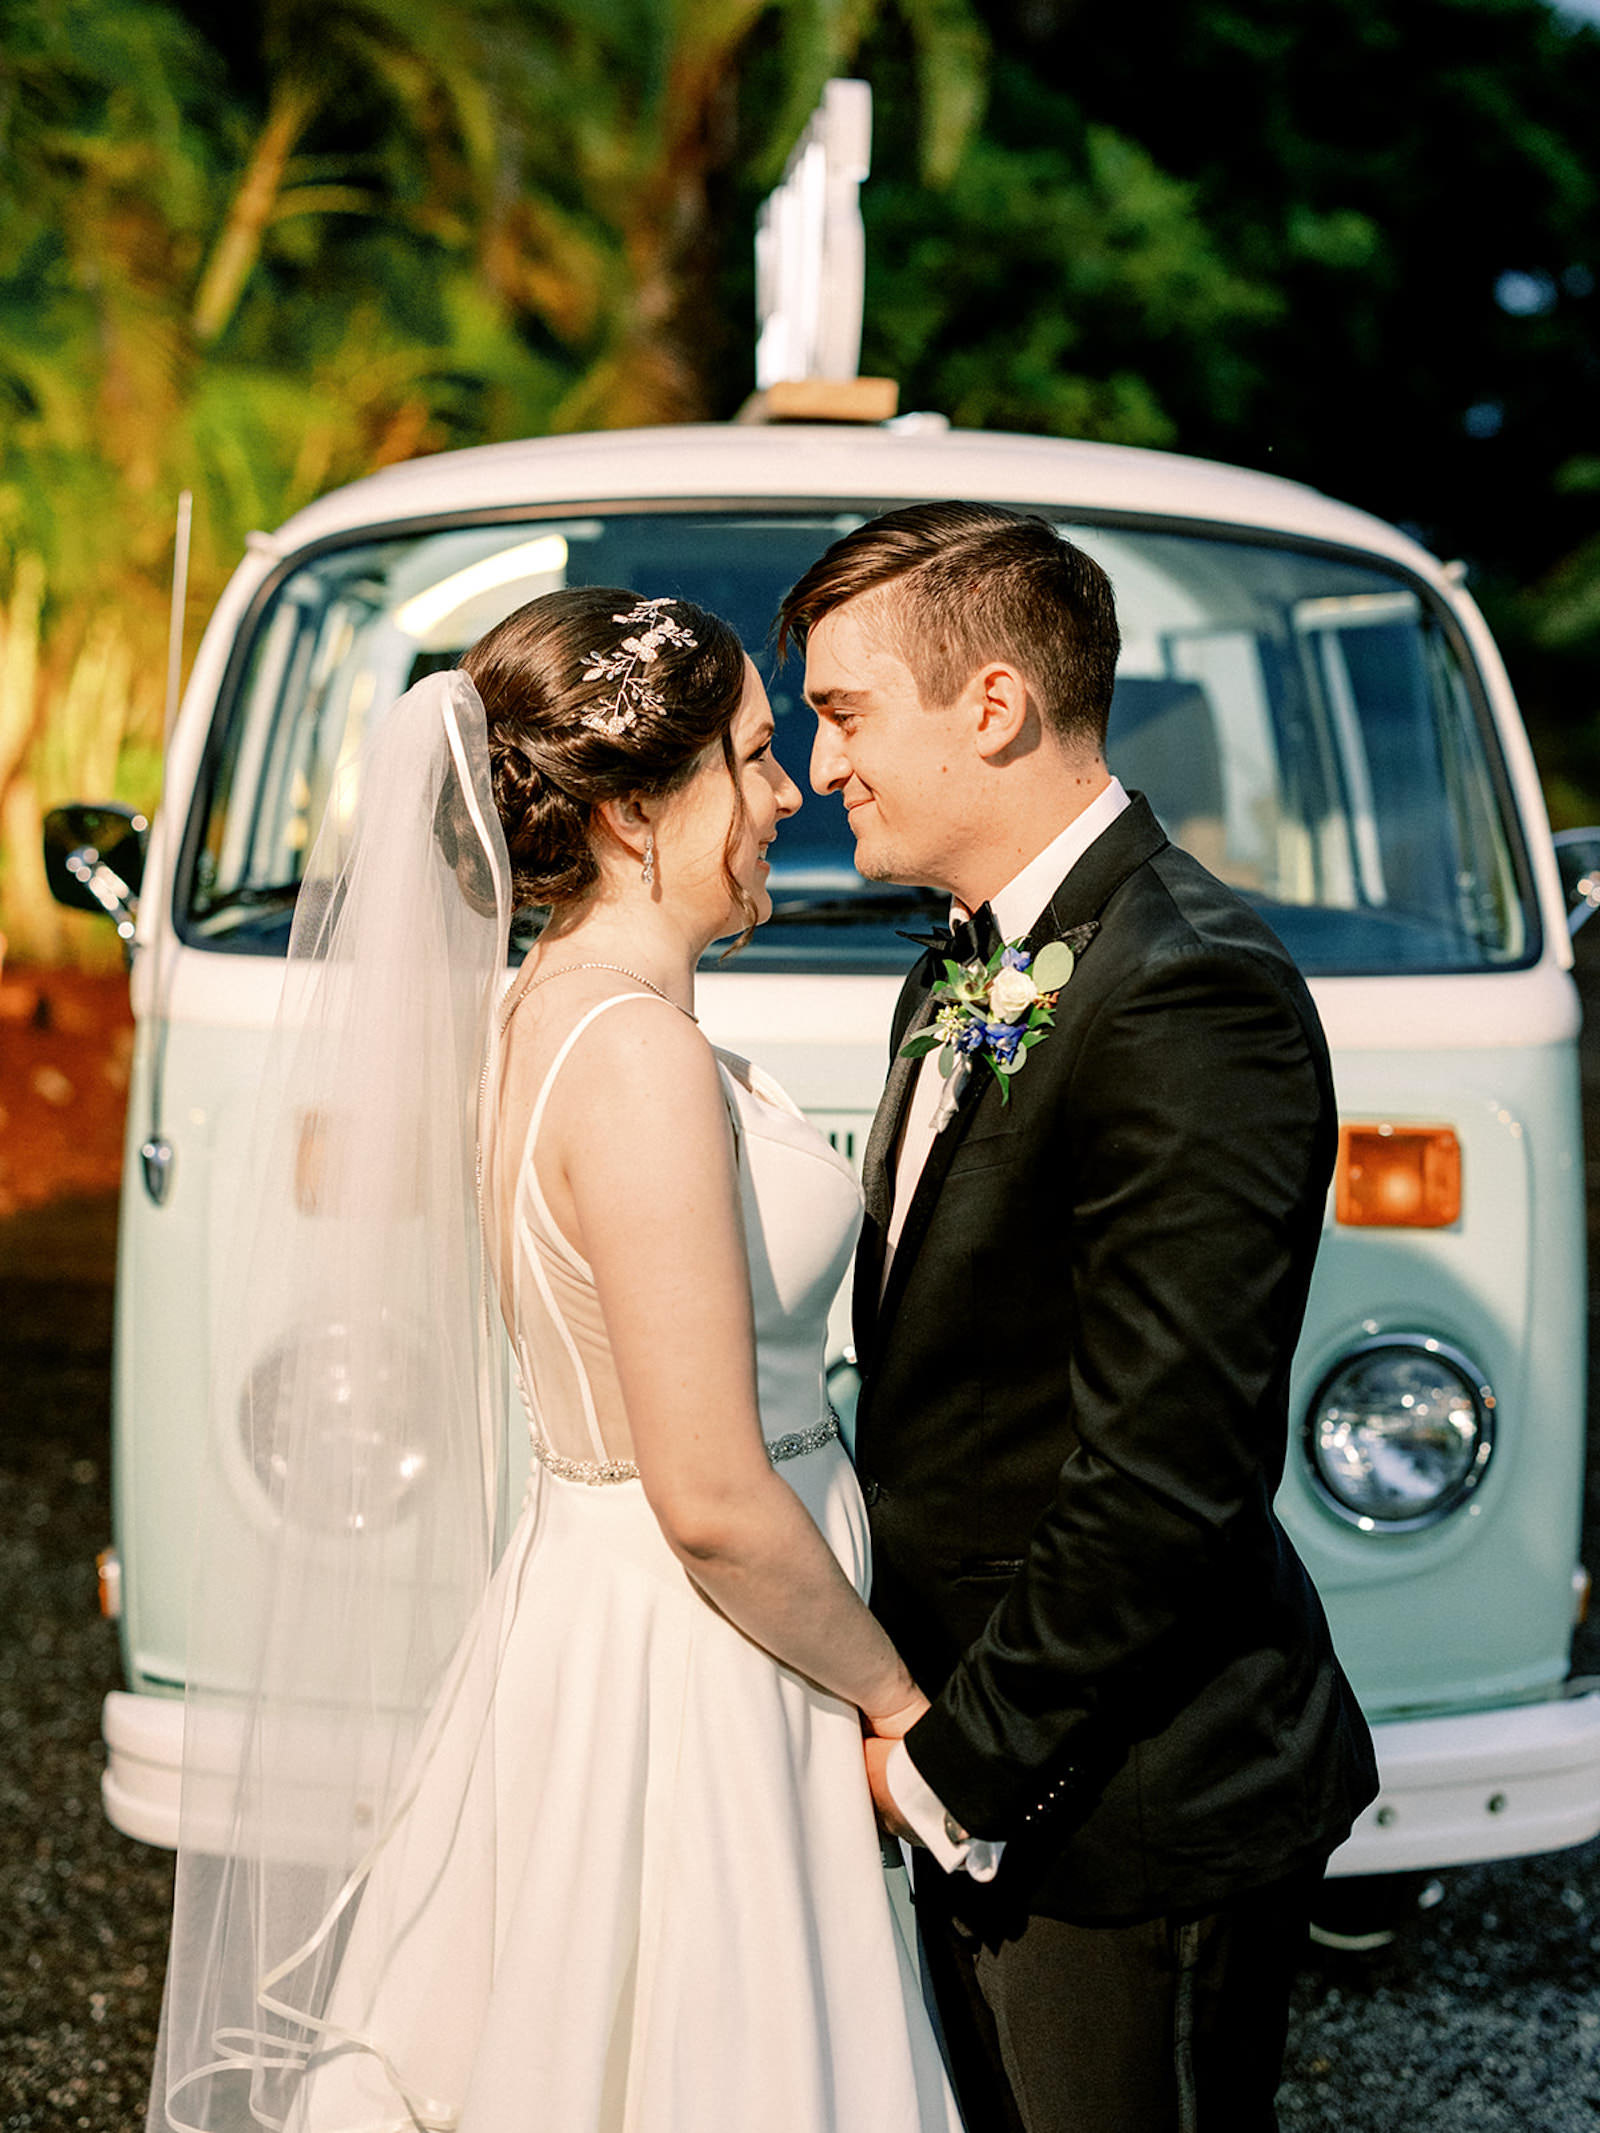 Something Blue | VW Bus Wedding Reception Photo Booth Ideas